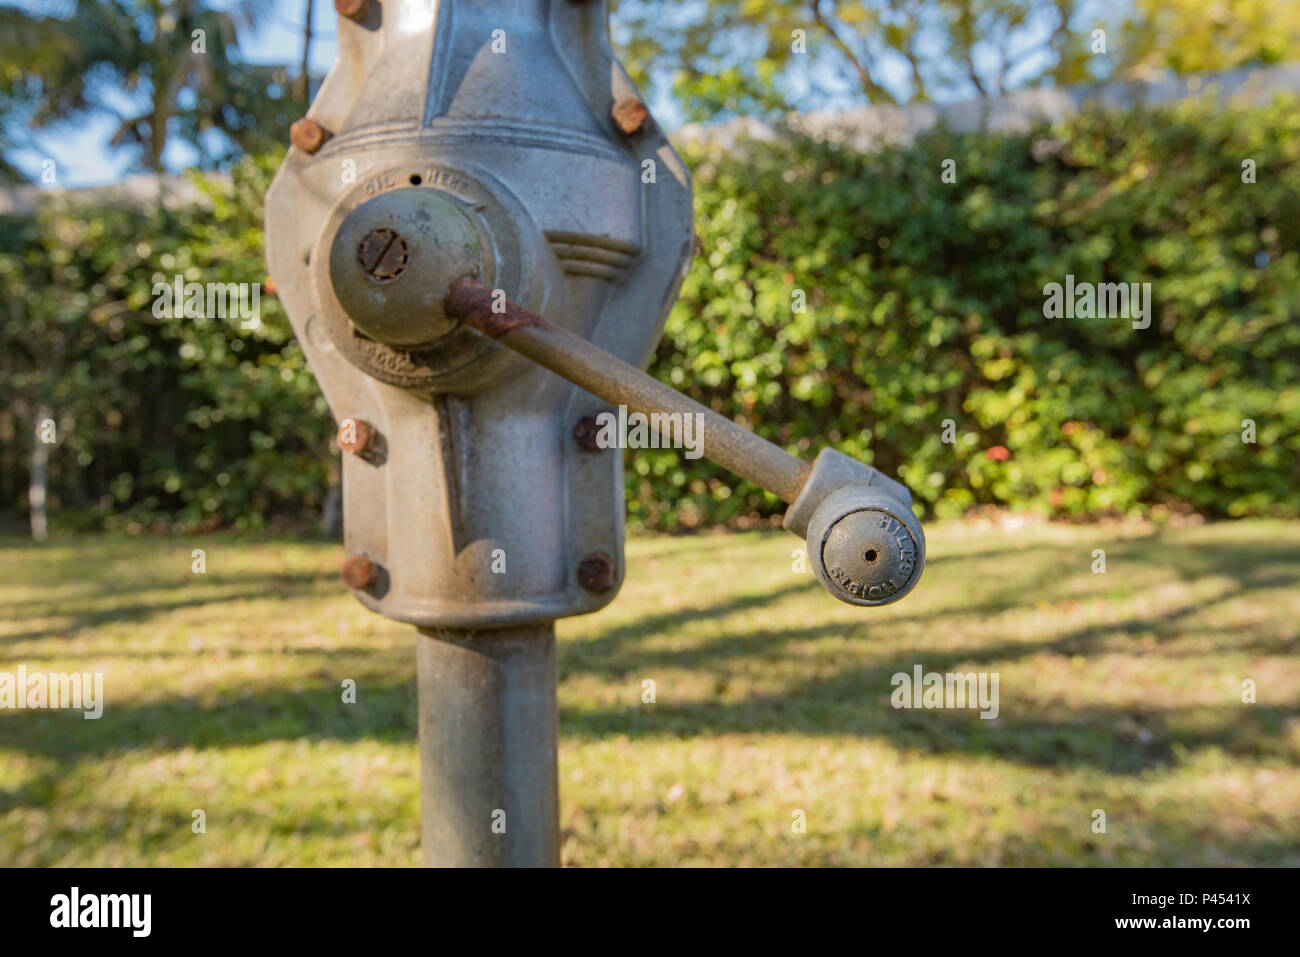 The winding mechanism of a Hills Hoist clothes drying line in an Australian backyard Stock Photo